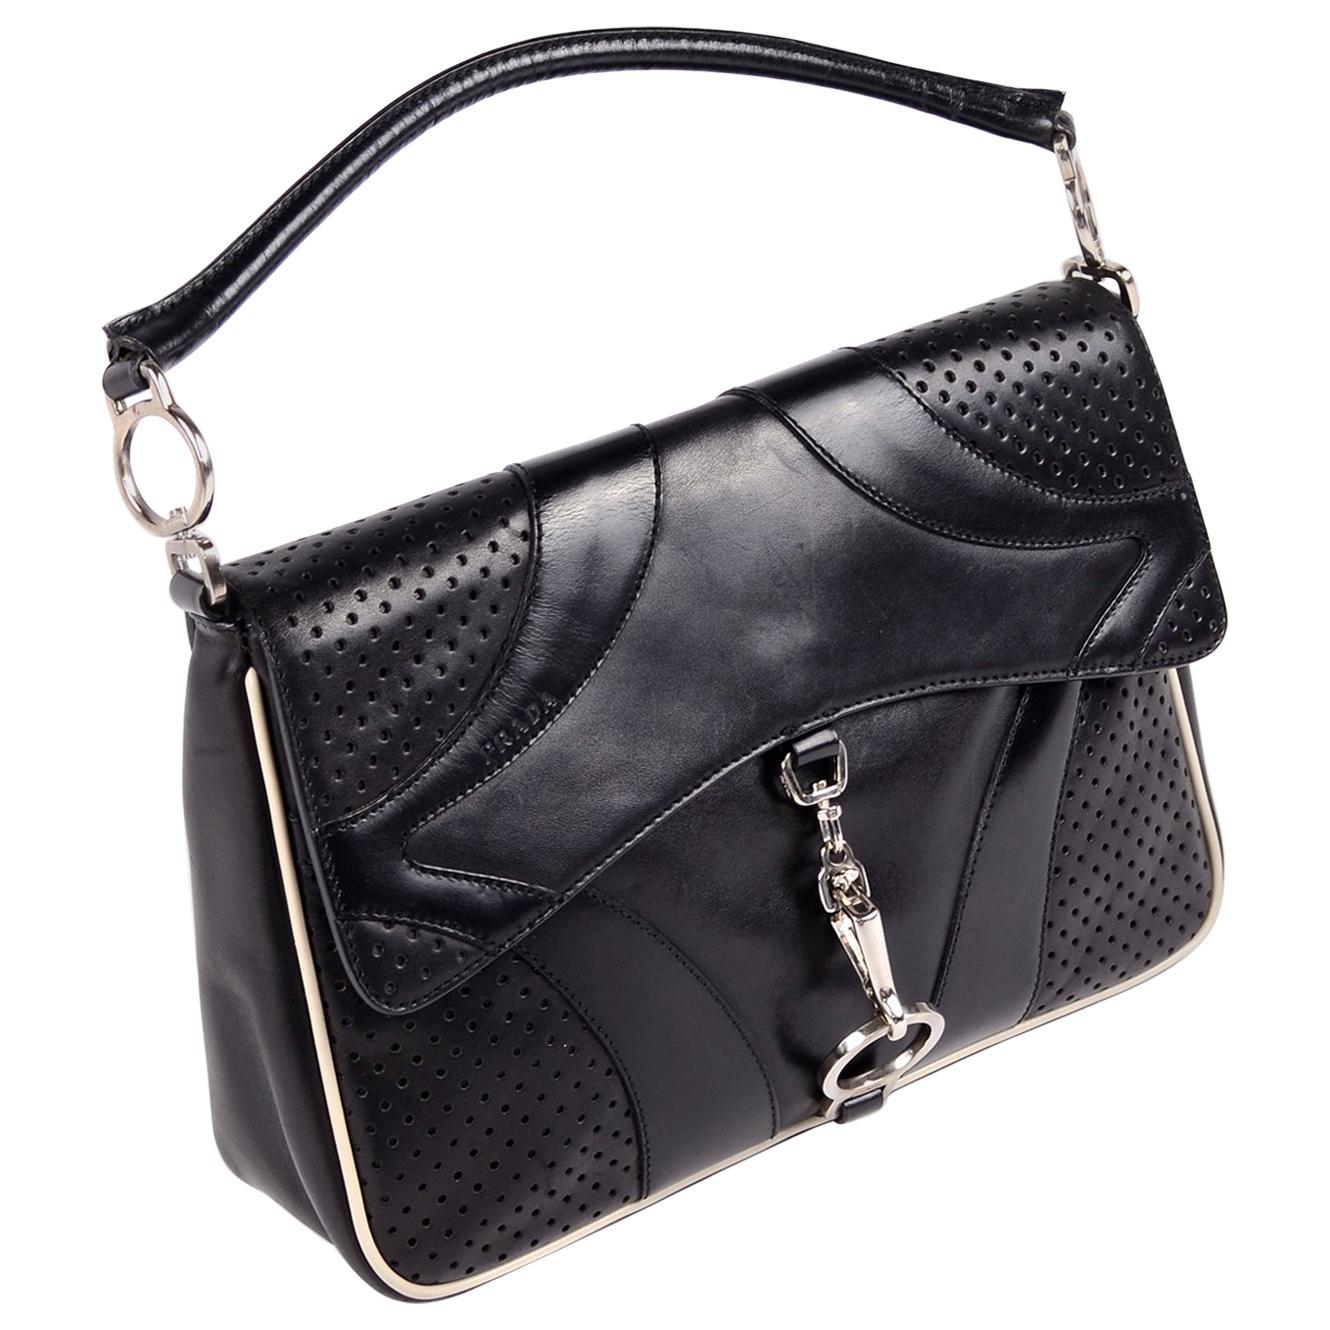 Prada Black Perforated Leather Top Handle Bag W Contrast Trim & Dust Bag 